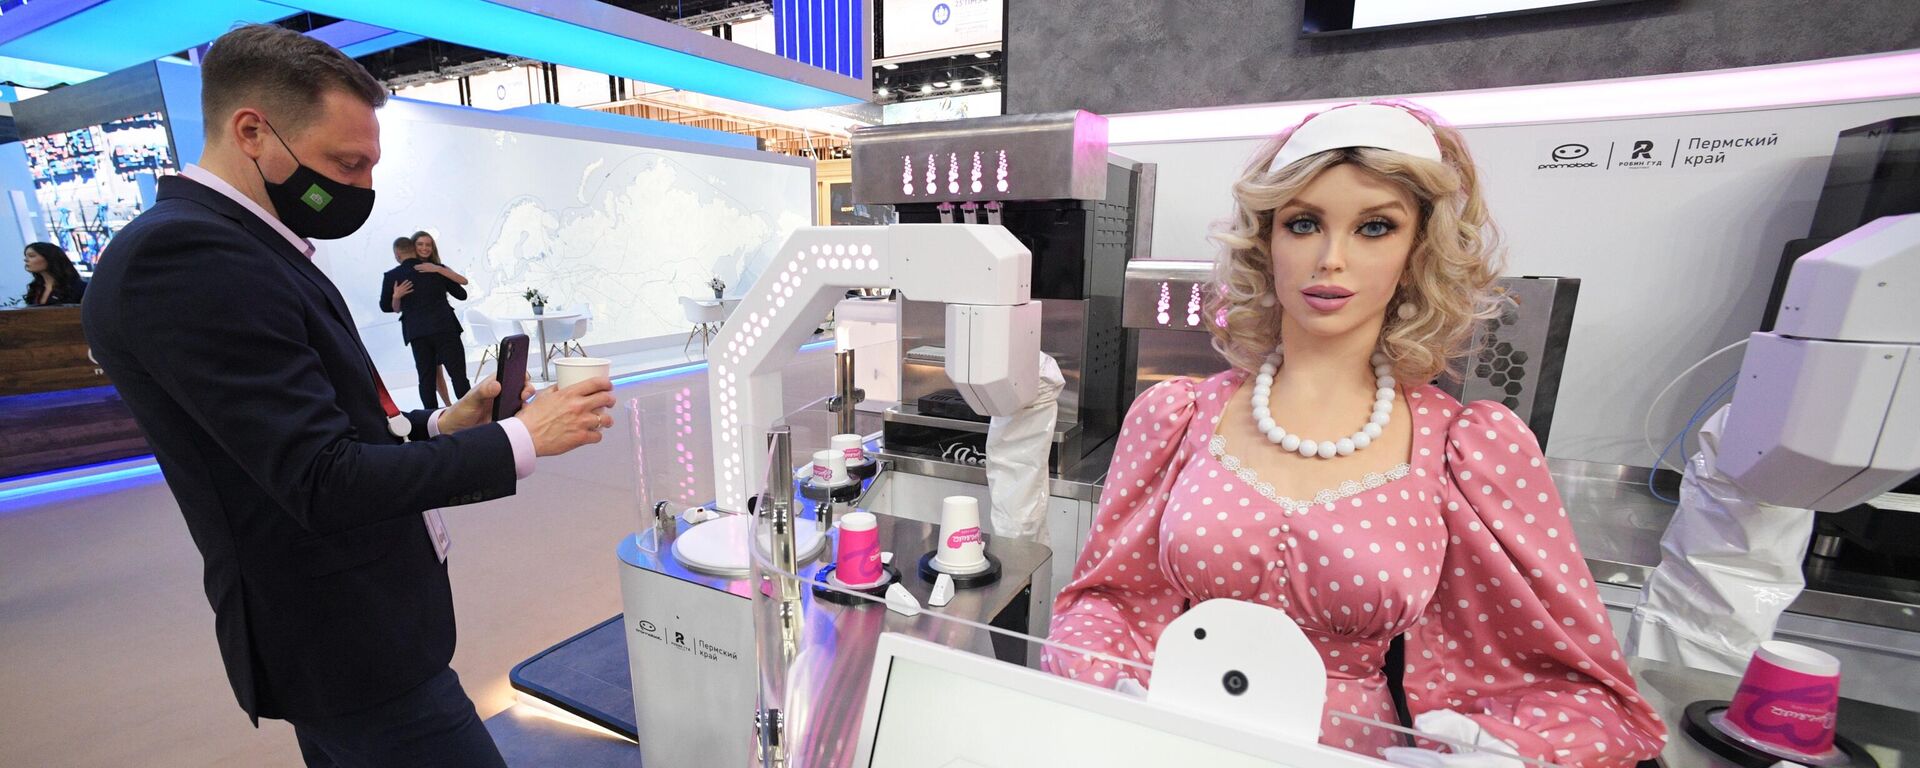 Robot 'Dunyasha' displayed at the Saint Petersburg International Economic Forum (SPIEF), on 15 June 2022. - Sputnik International, 1920, 17.06.2022